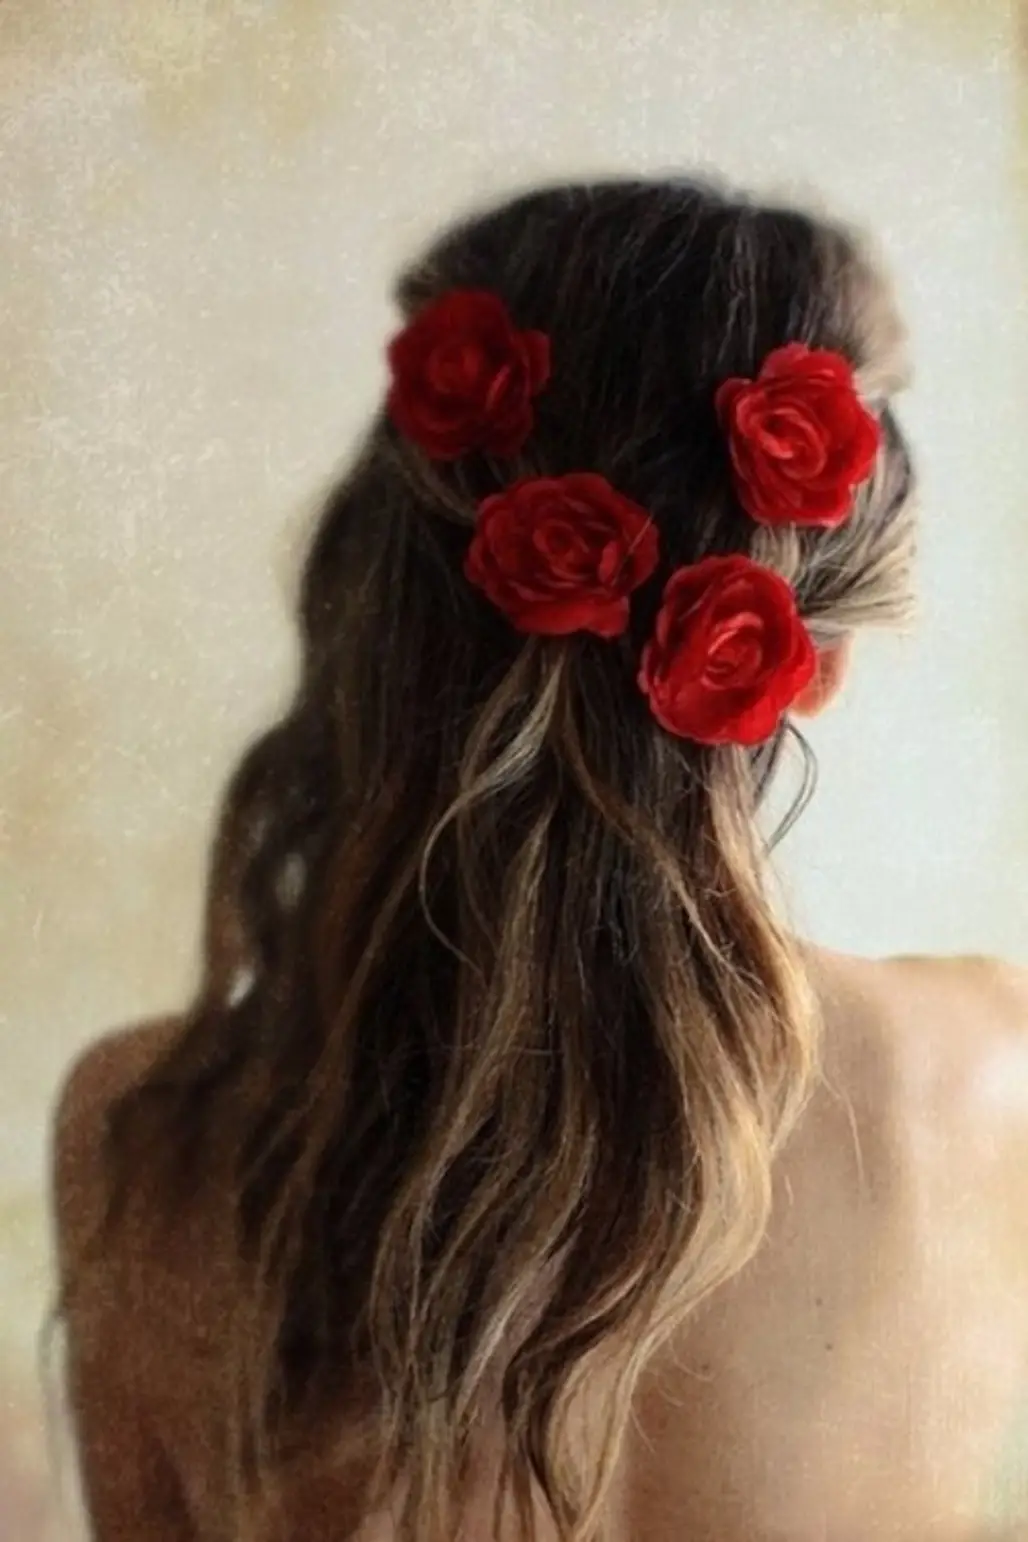 Wear Flowers in Your Hair